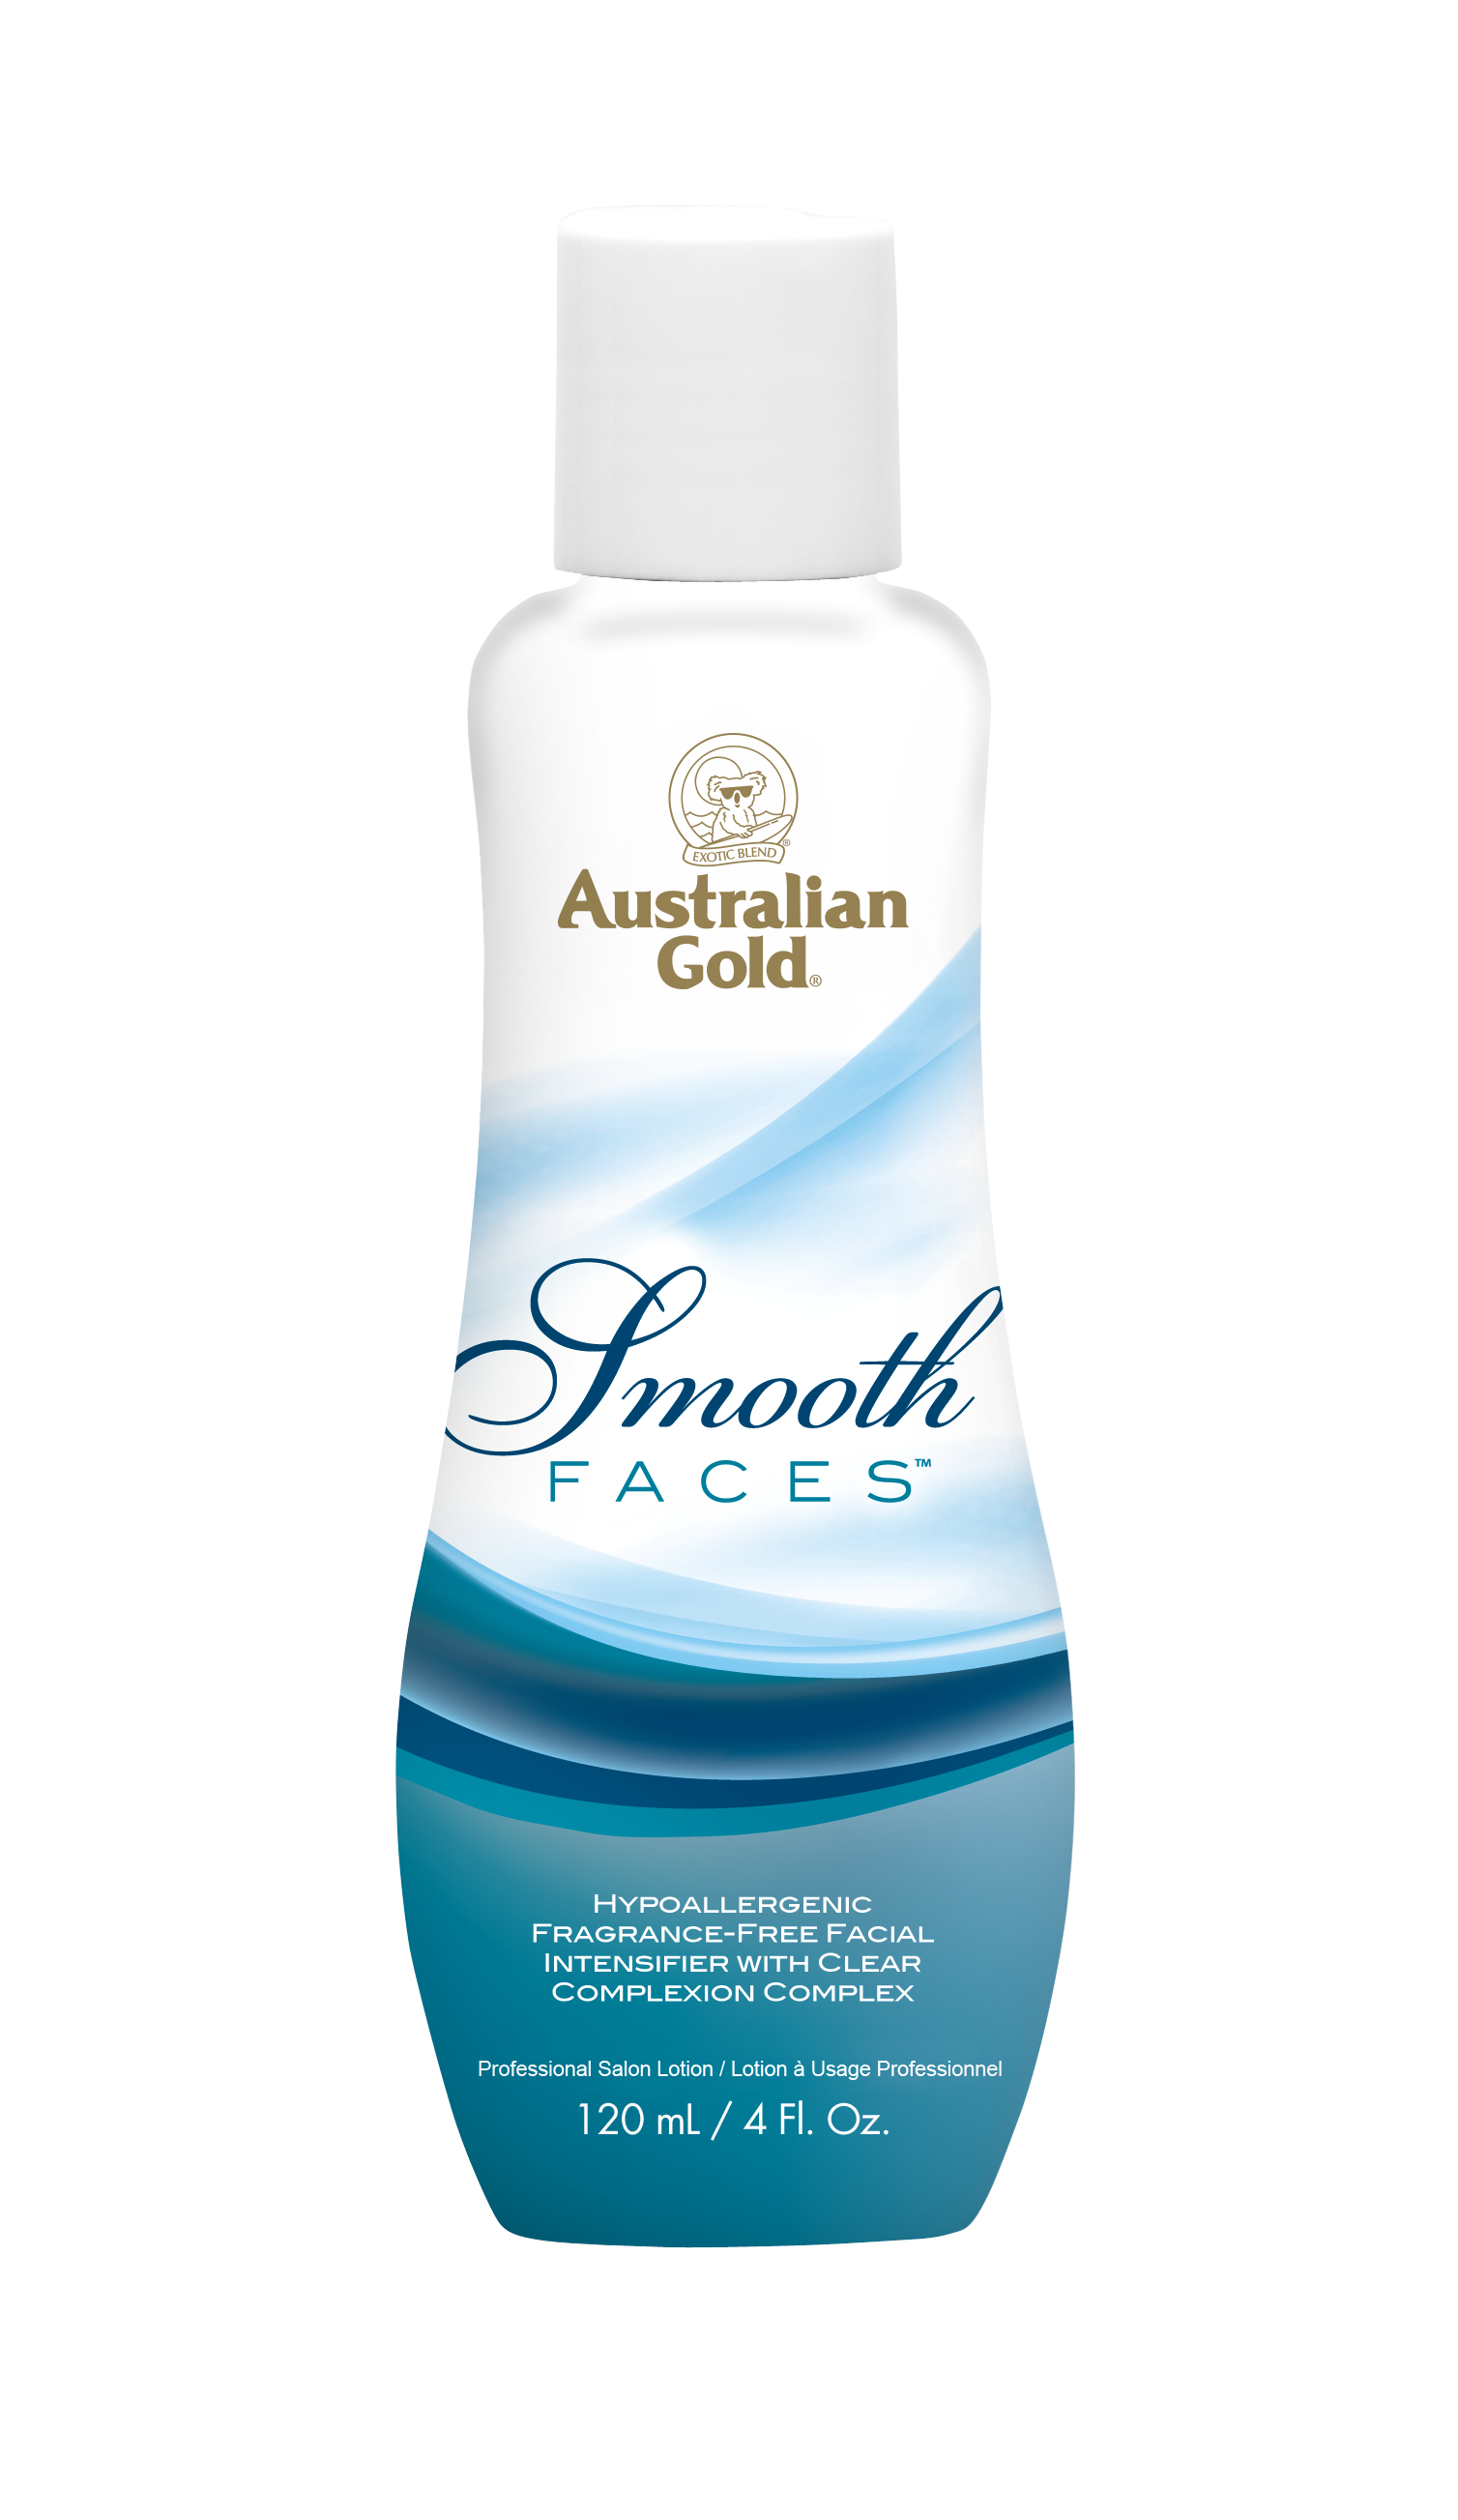 Australian Gold - Smooth Faces (120ml)